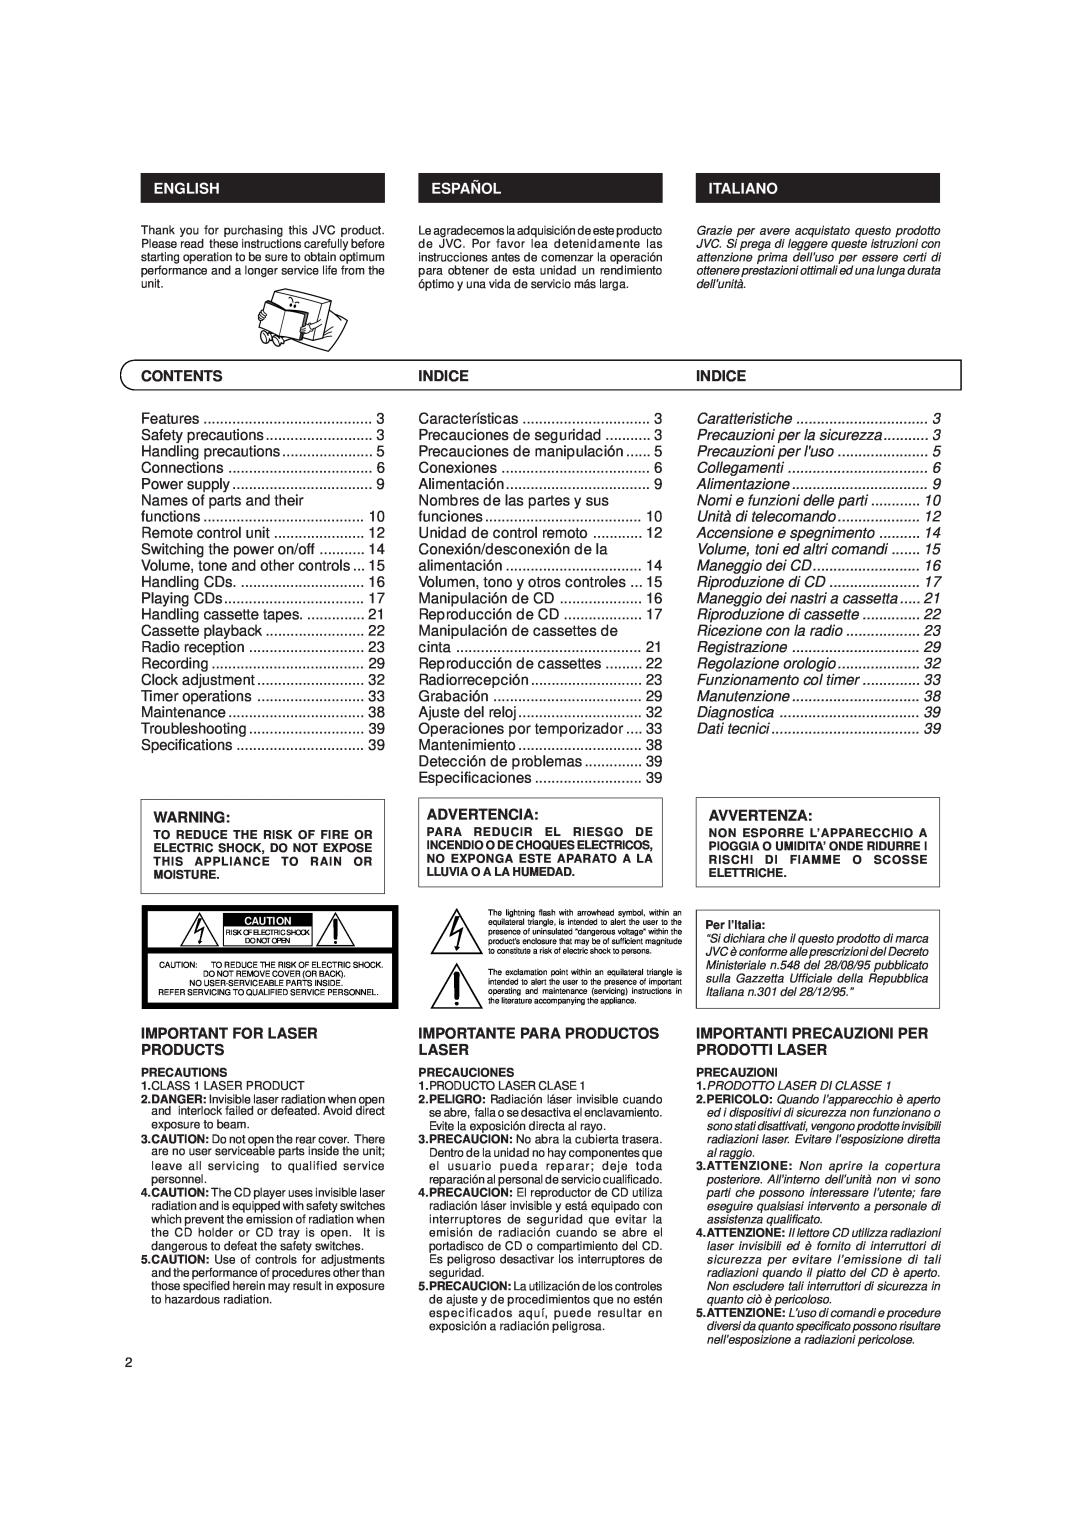 JVC LVT0059-001A, UX-T250R manual Indice, English, Español, Italiano 